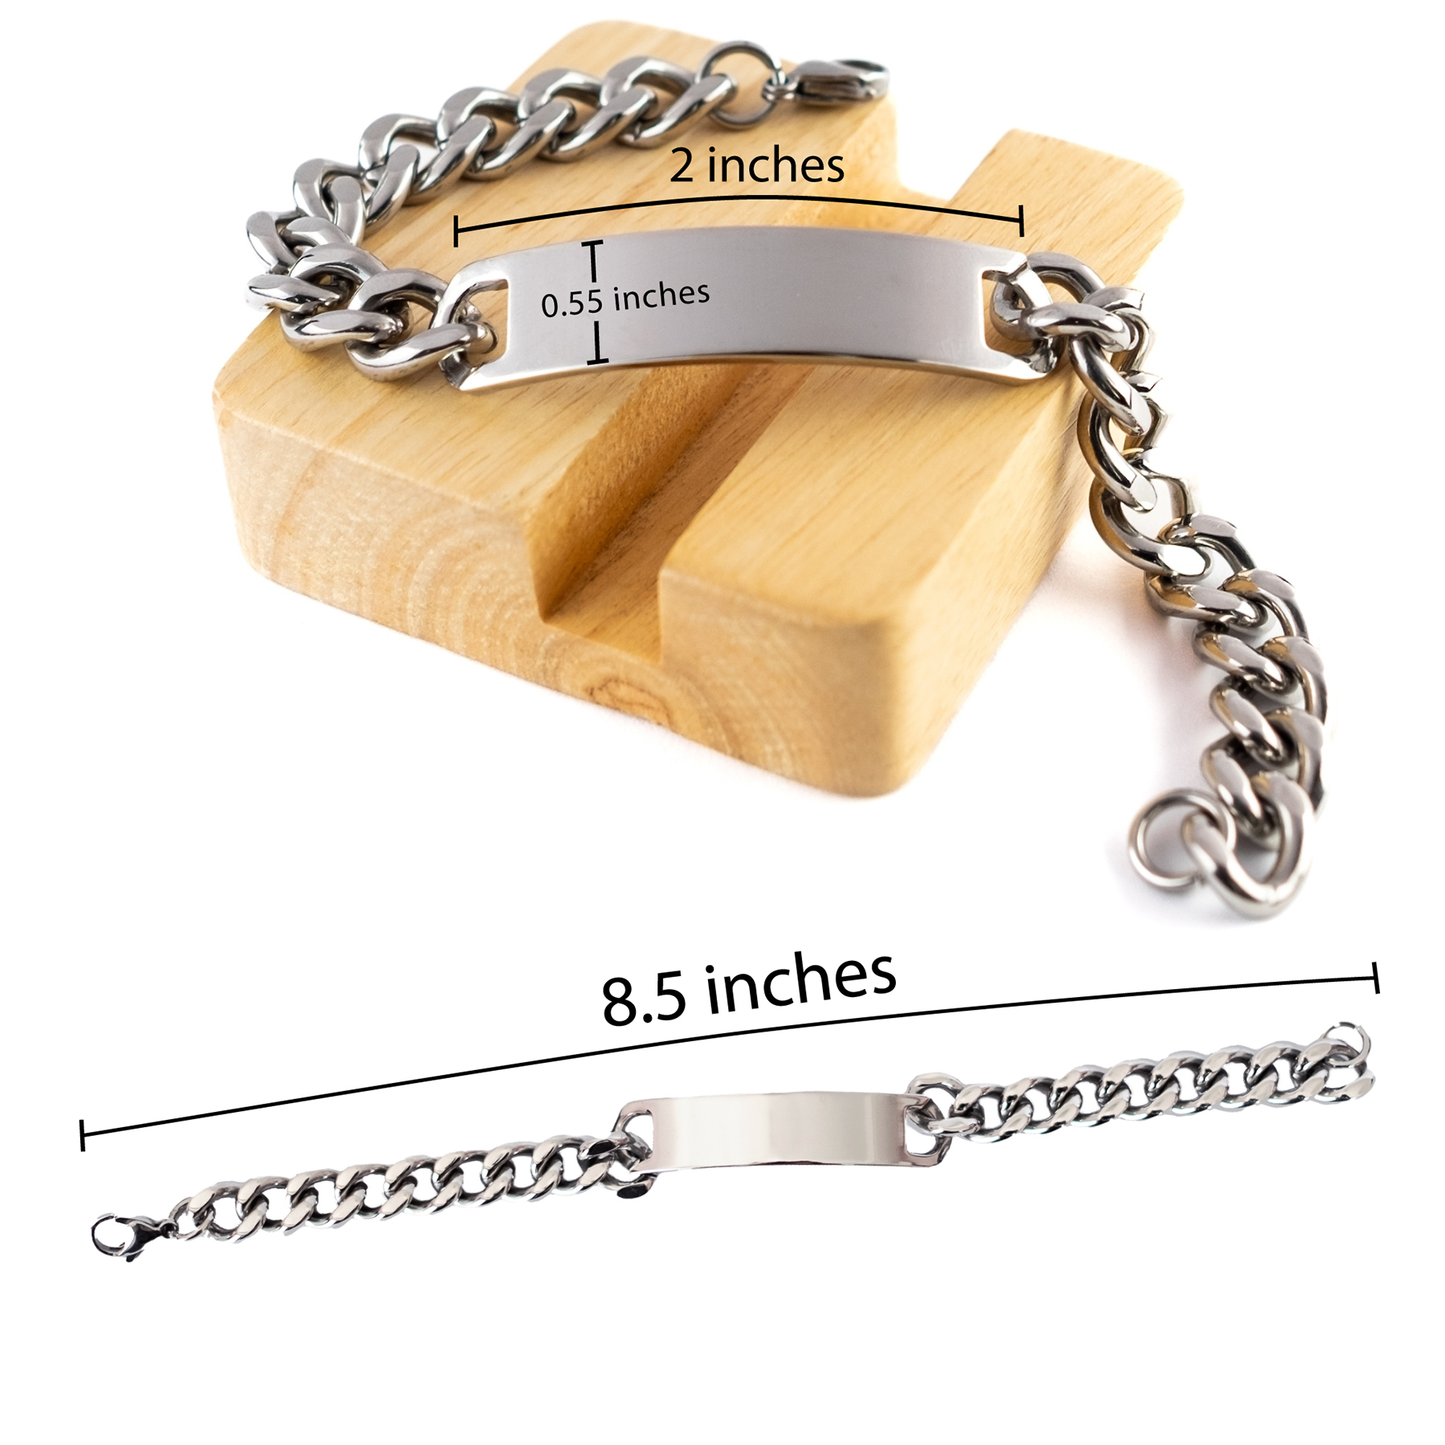 Stainless Steel Bracelet Nephew Fearless Love Inspirational Gift for Christmas